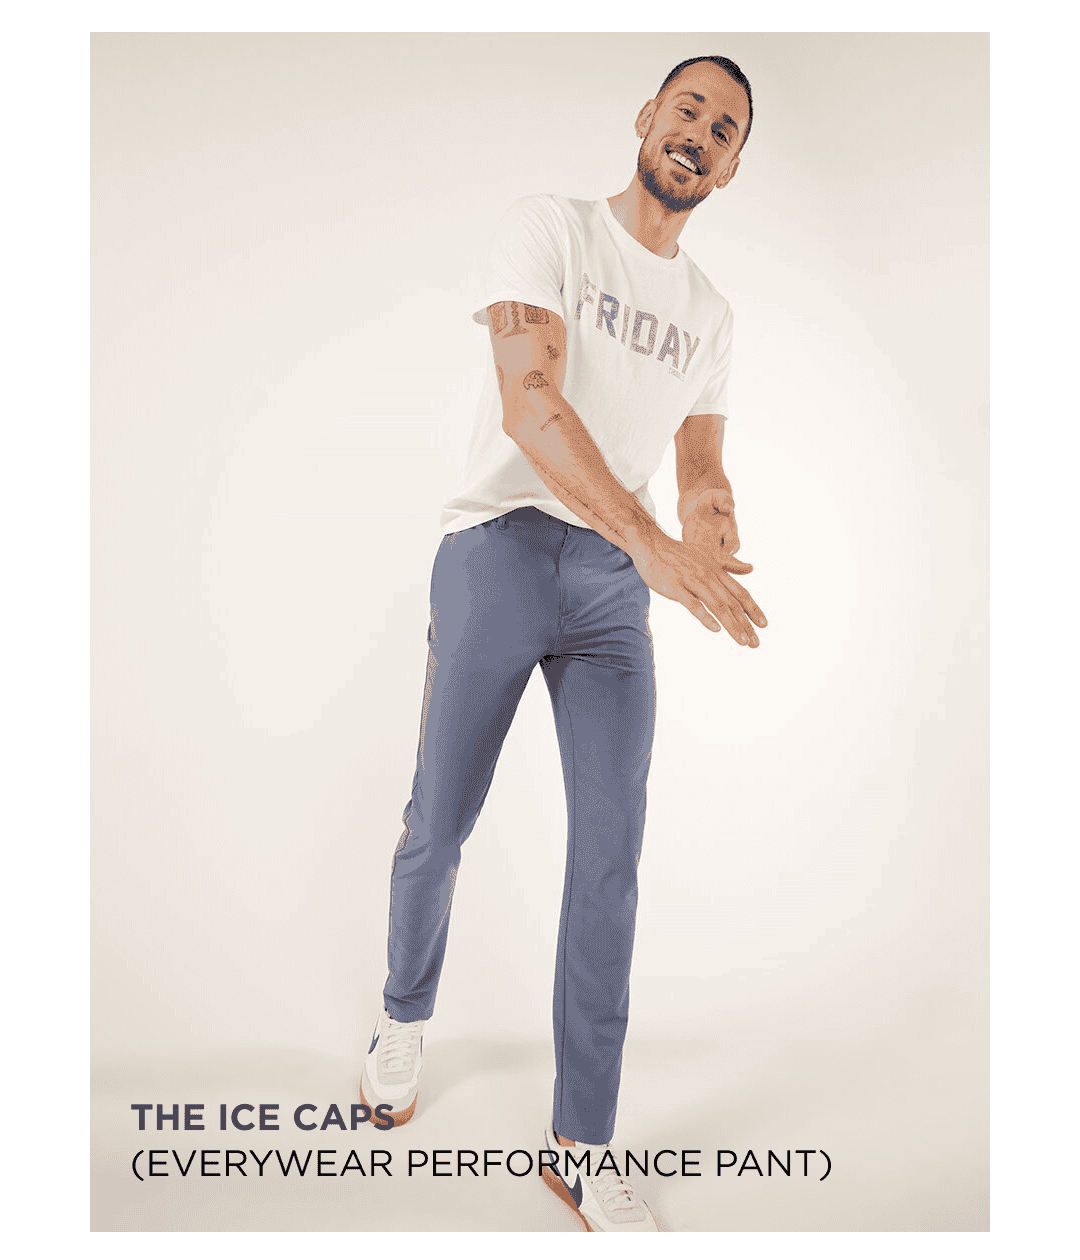 Everywear Performance Pant: The Ice Caps